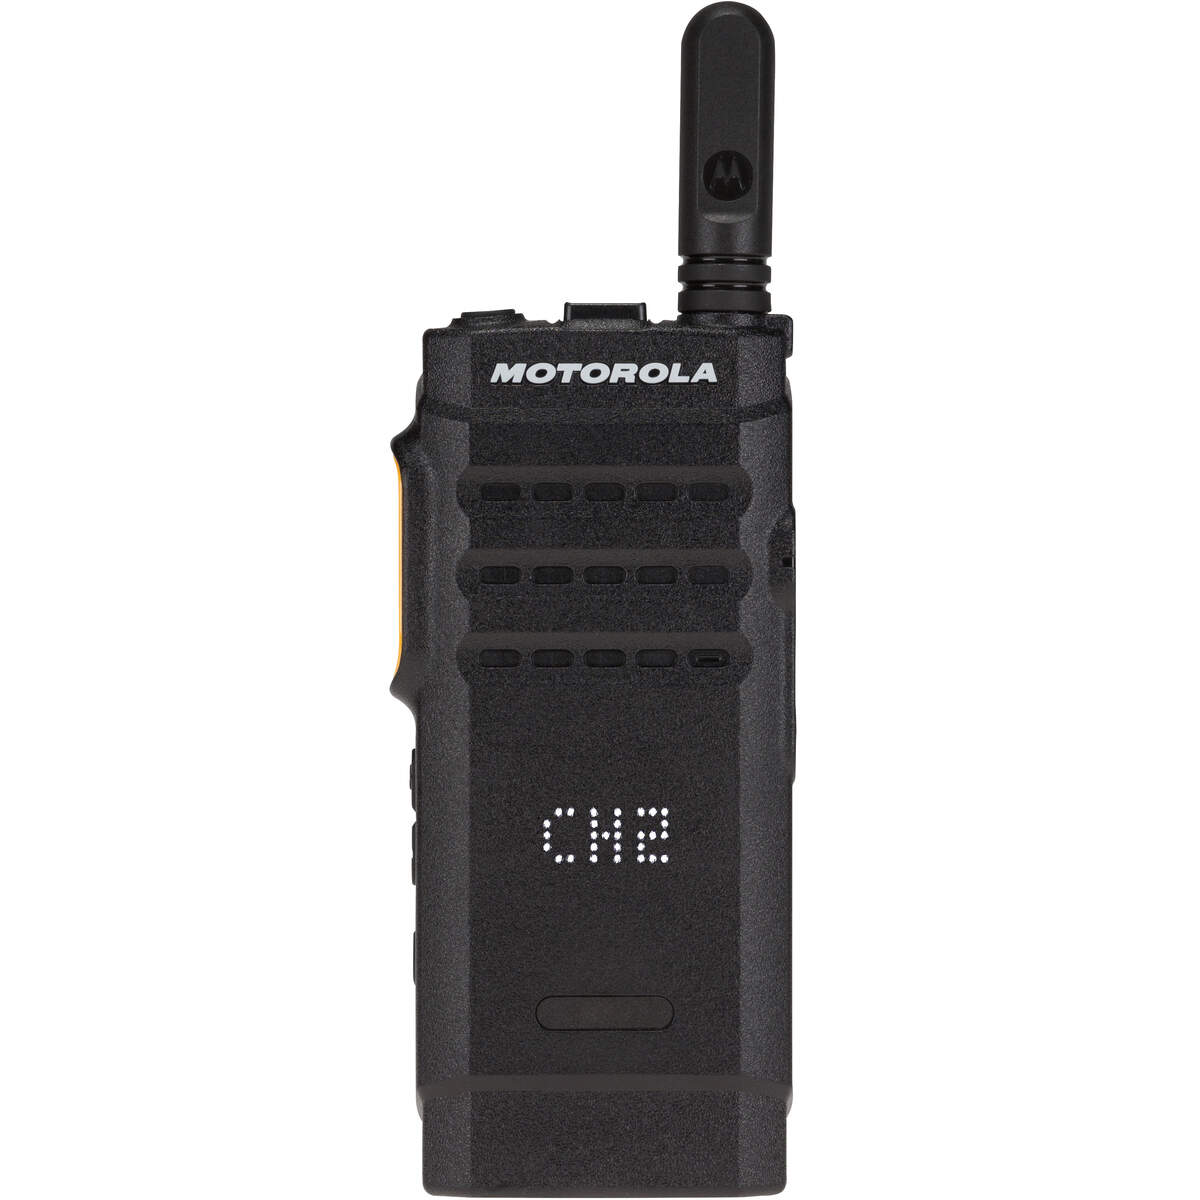 Motorola SL1600 sans chargeur - UHF image